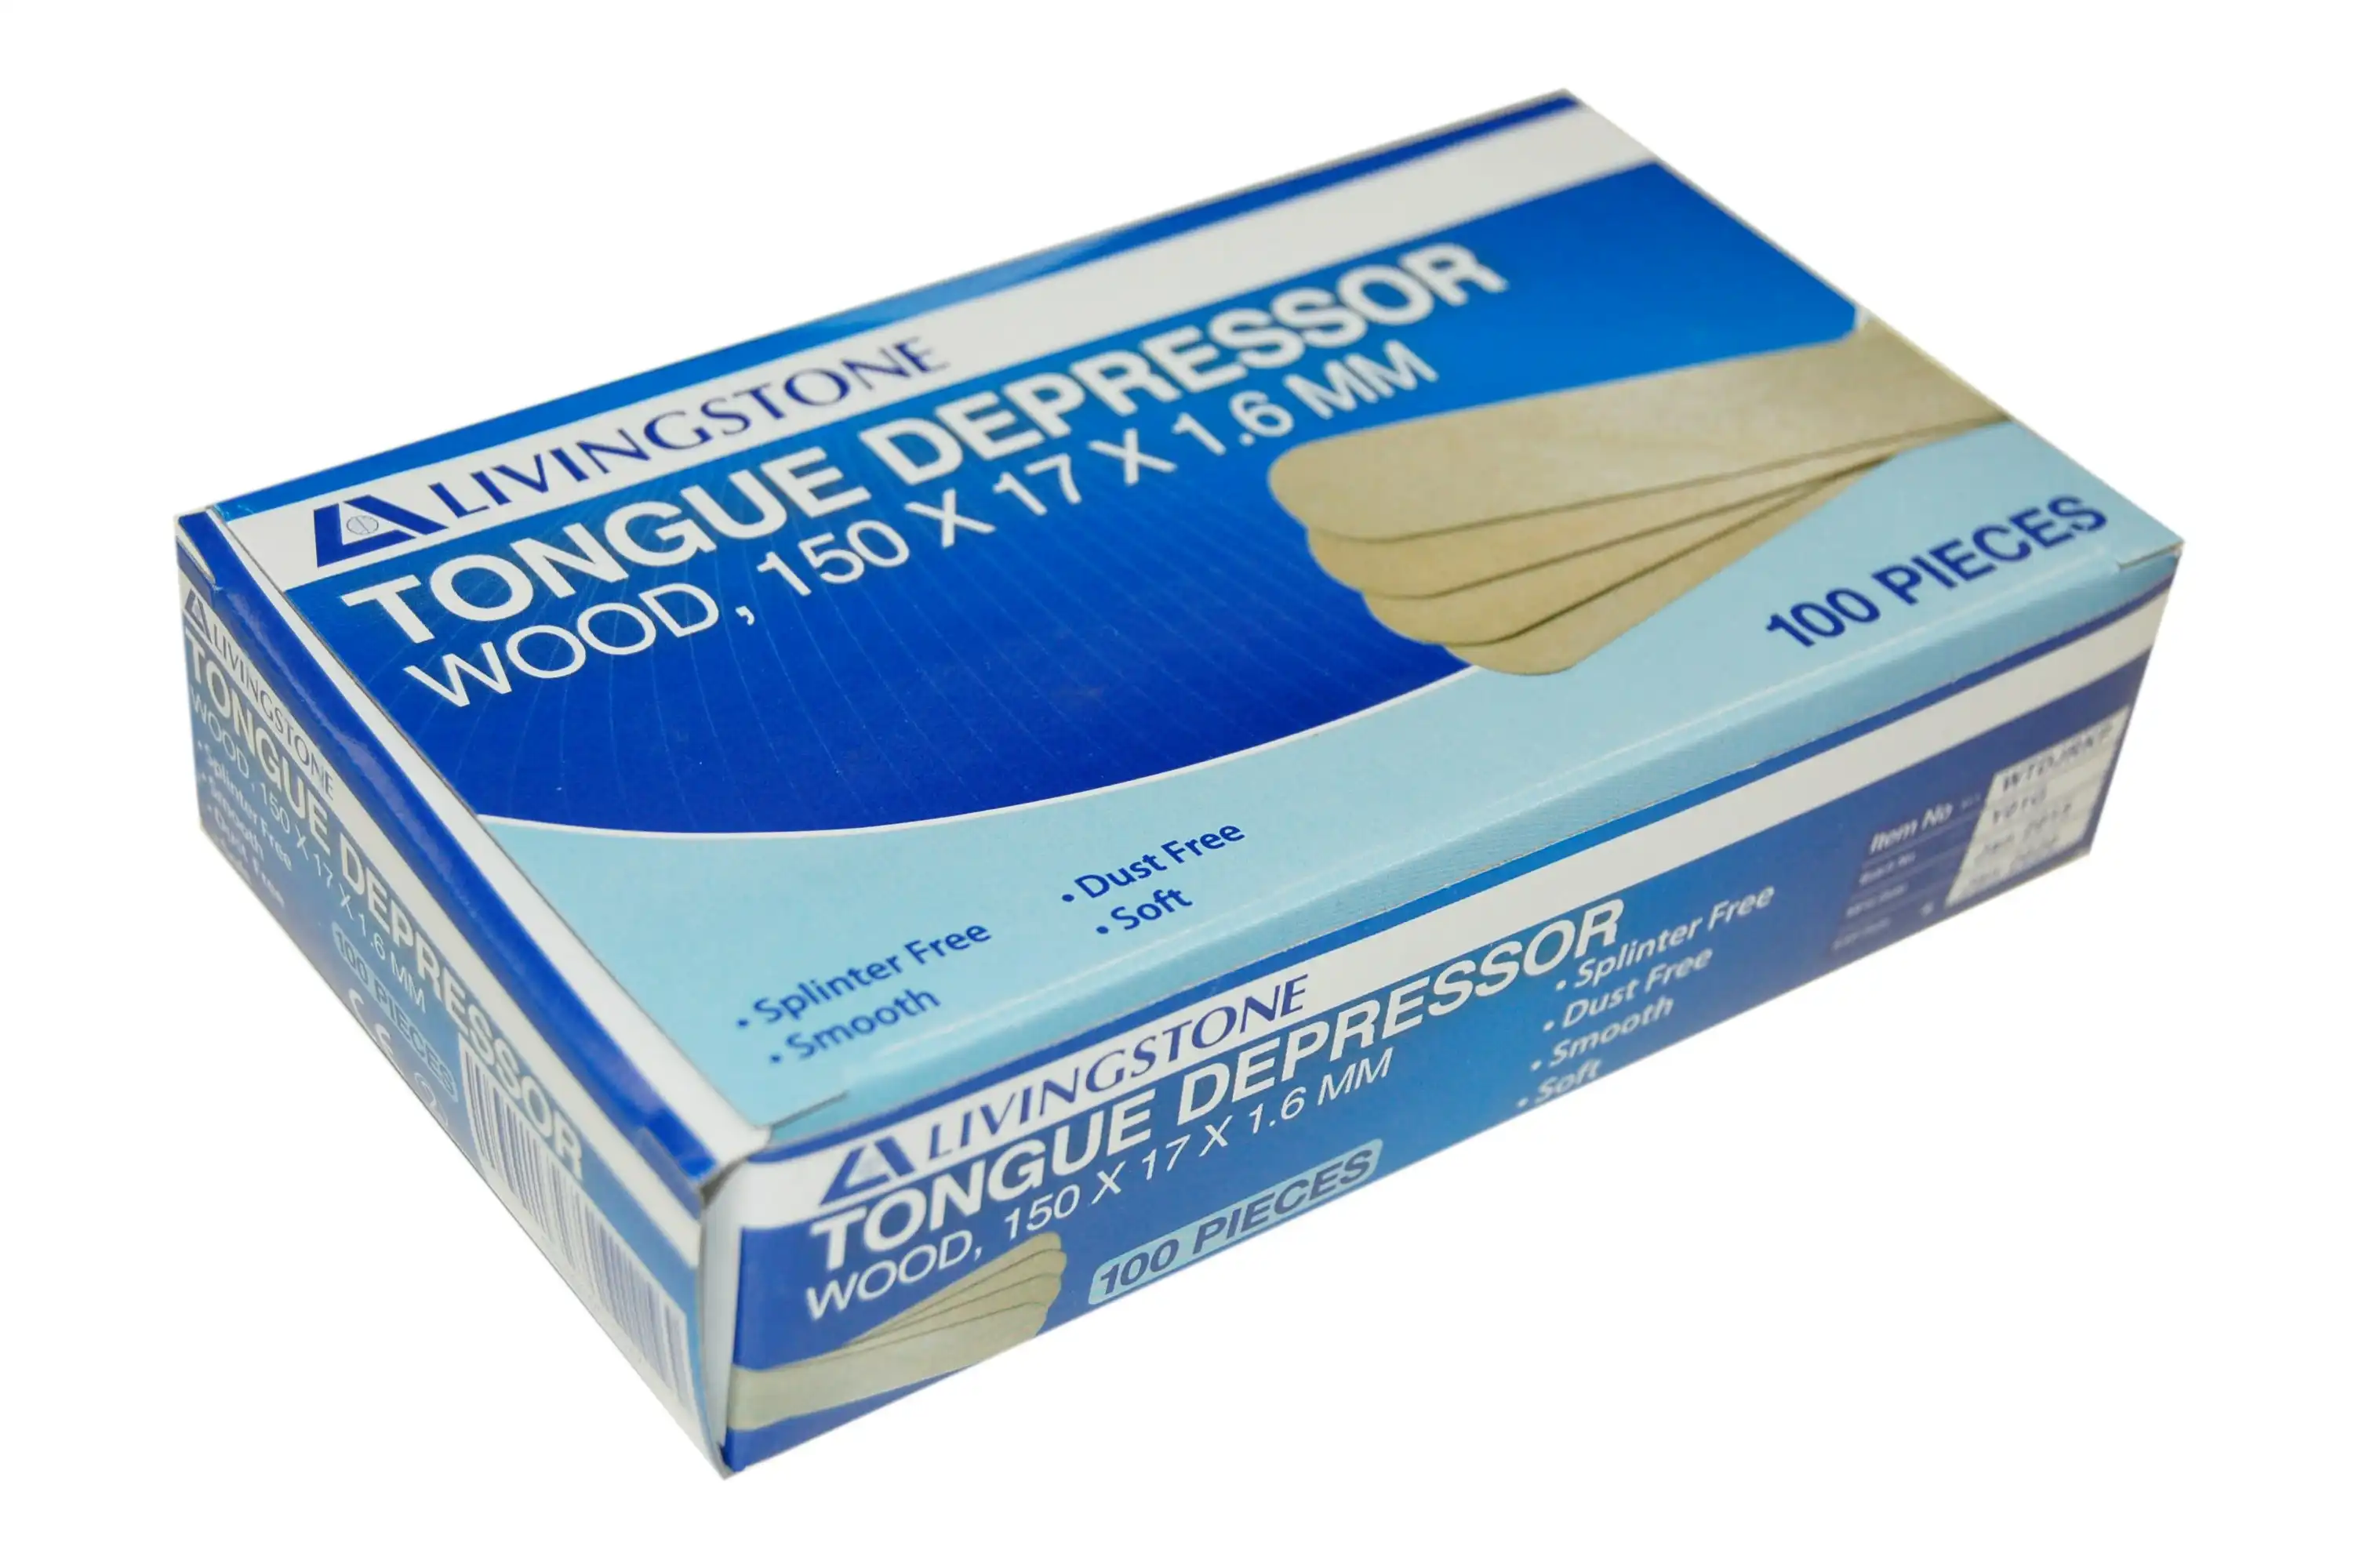 Livingstone Wooden Tongue Depressors 150 x 17 x 1.6 mm Non-Sterile 100 Box